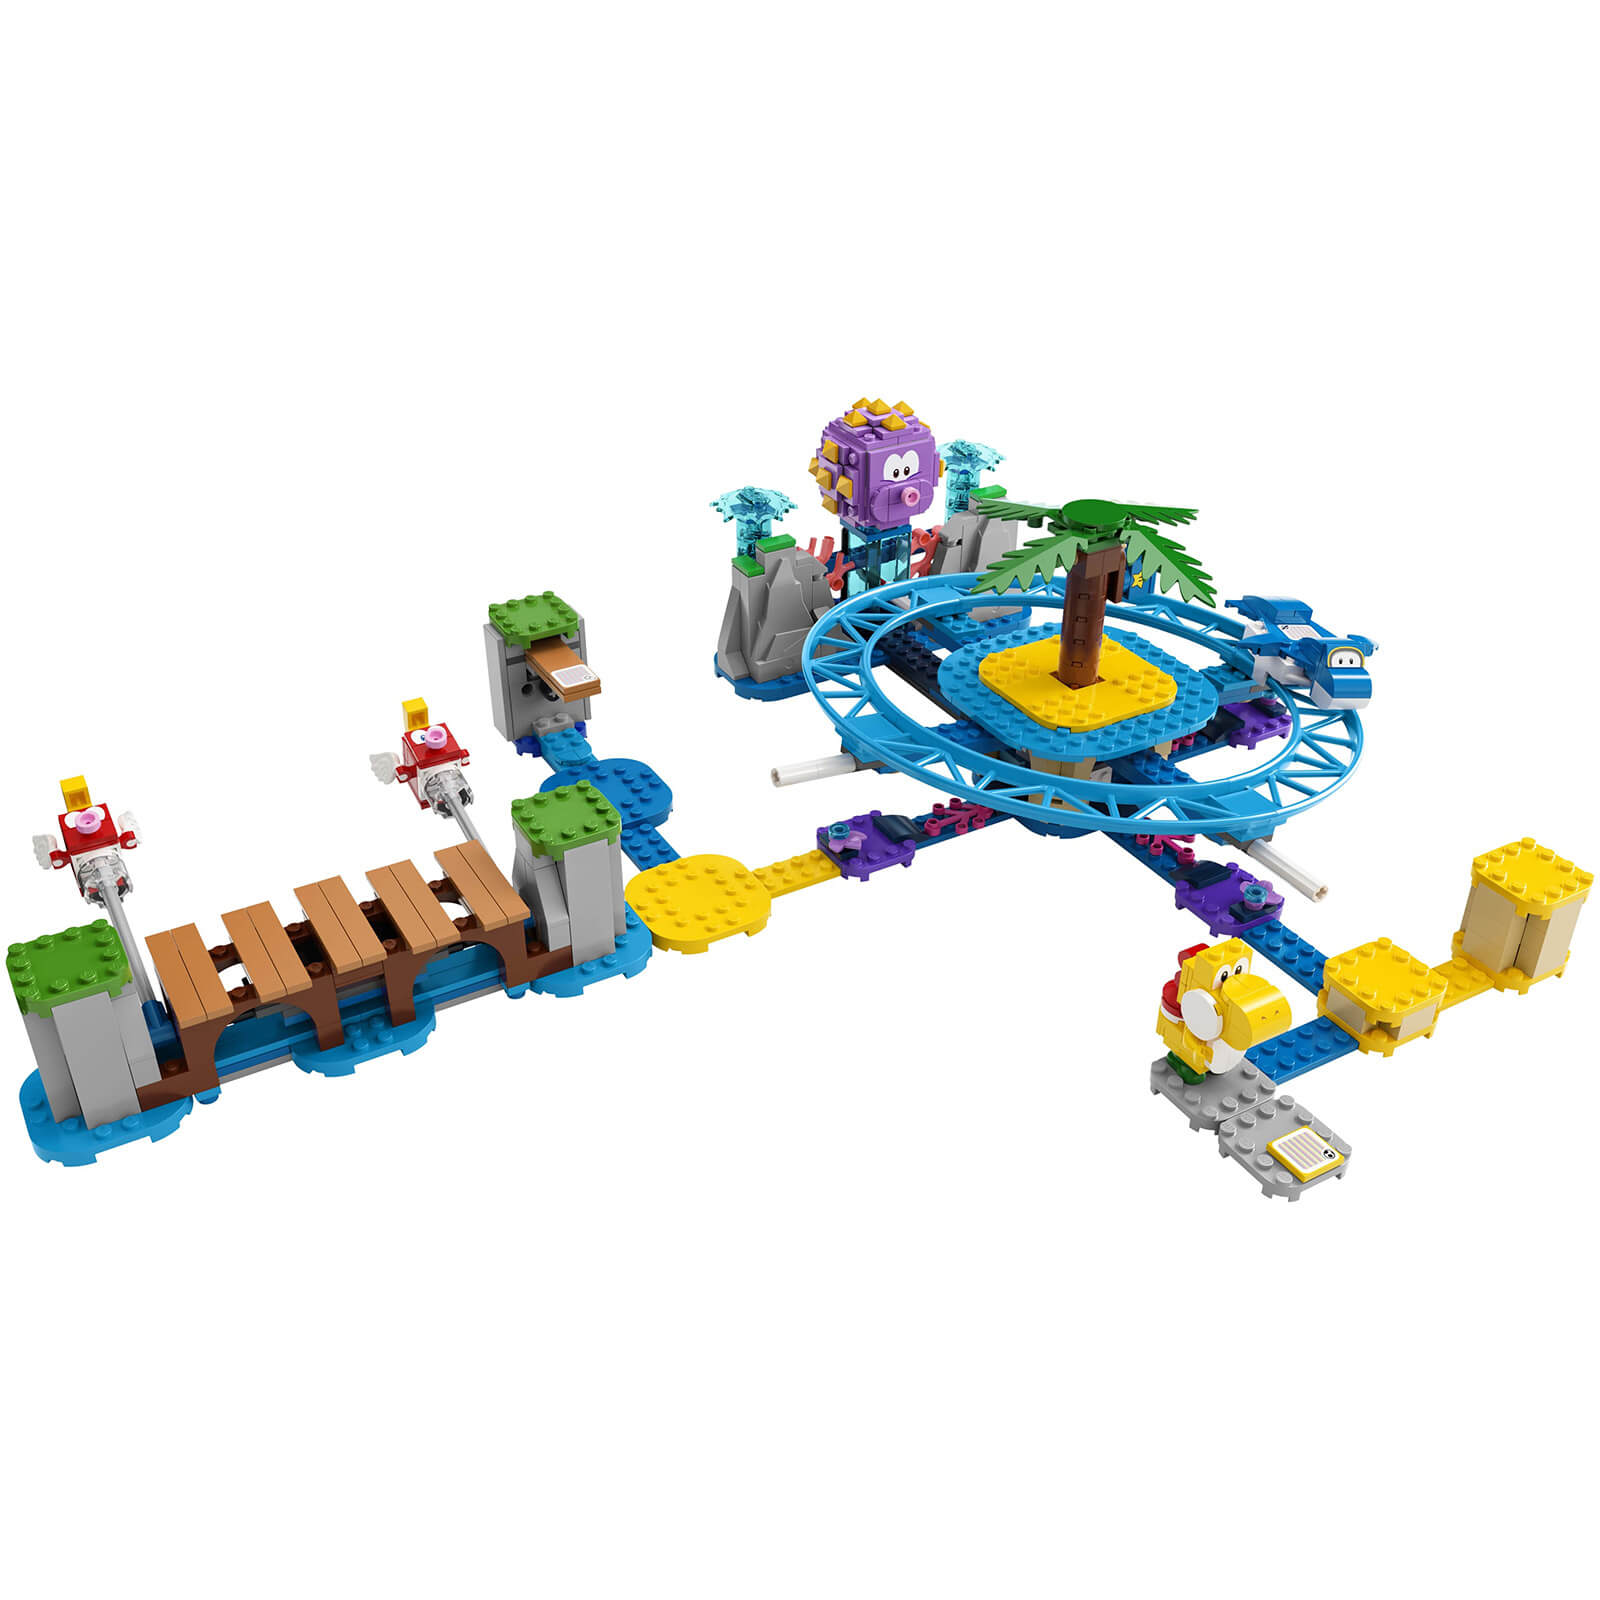 LEGO Super Mario Big Urchin Beach Ride Expansion Set (71400)